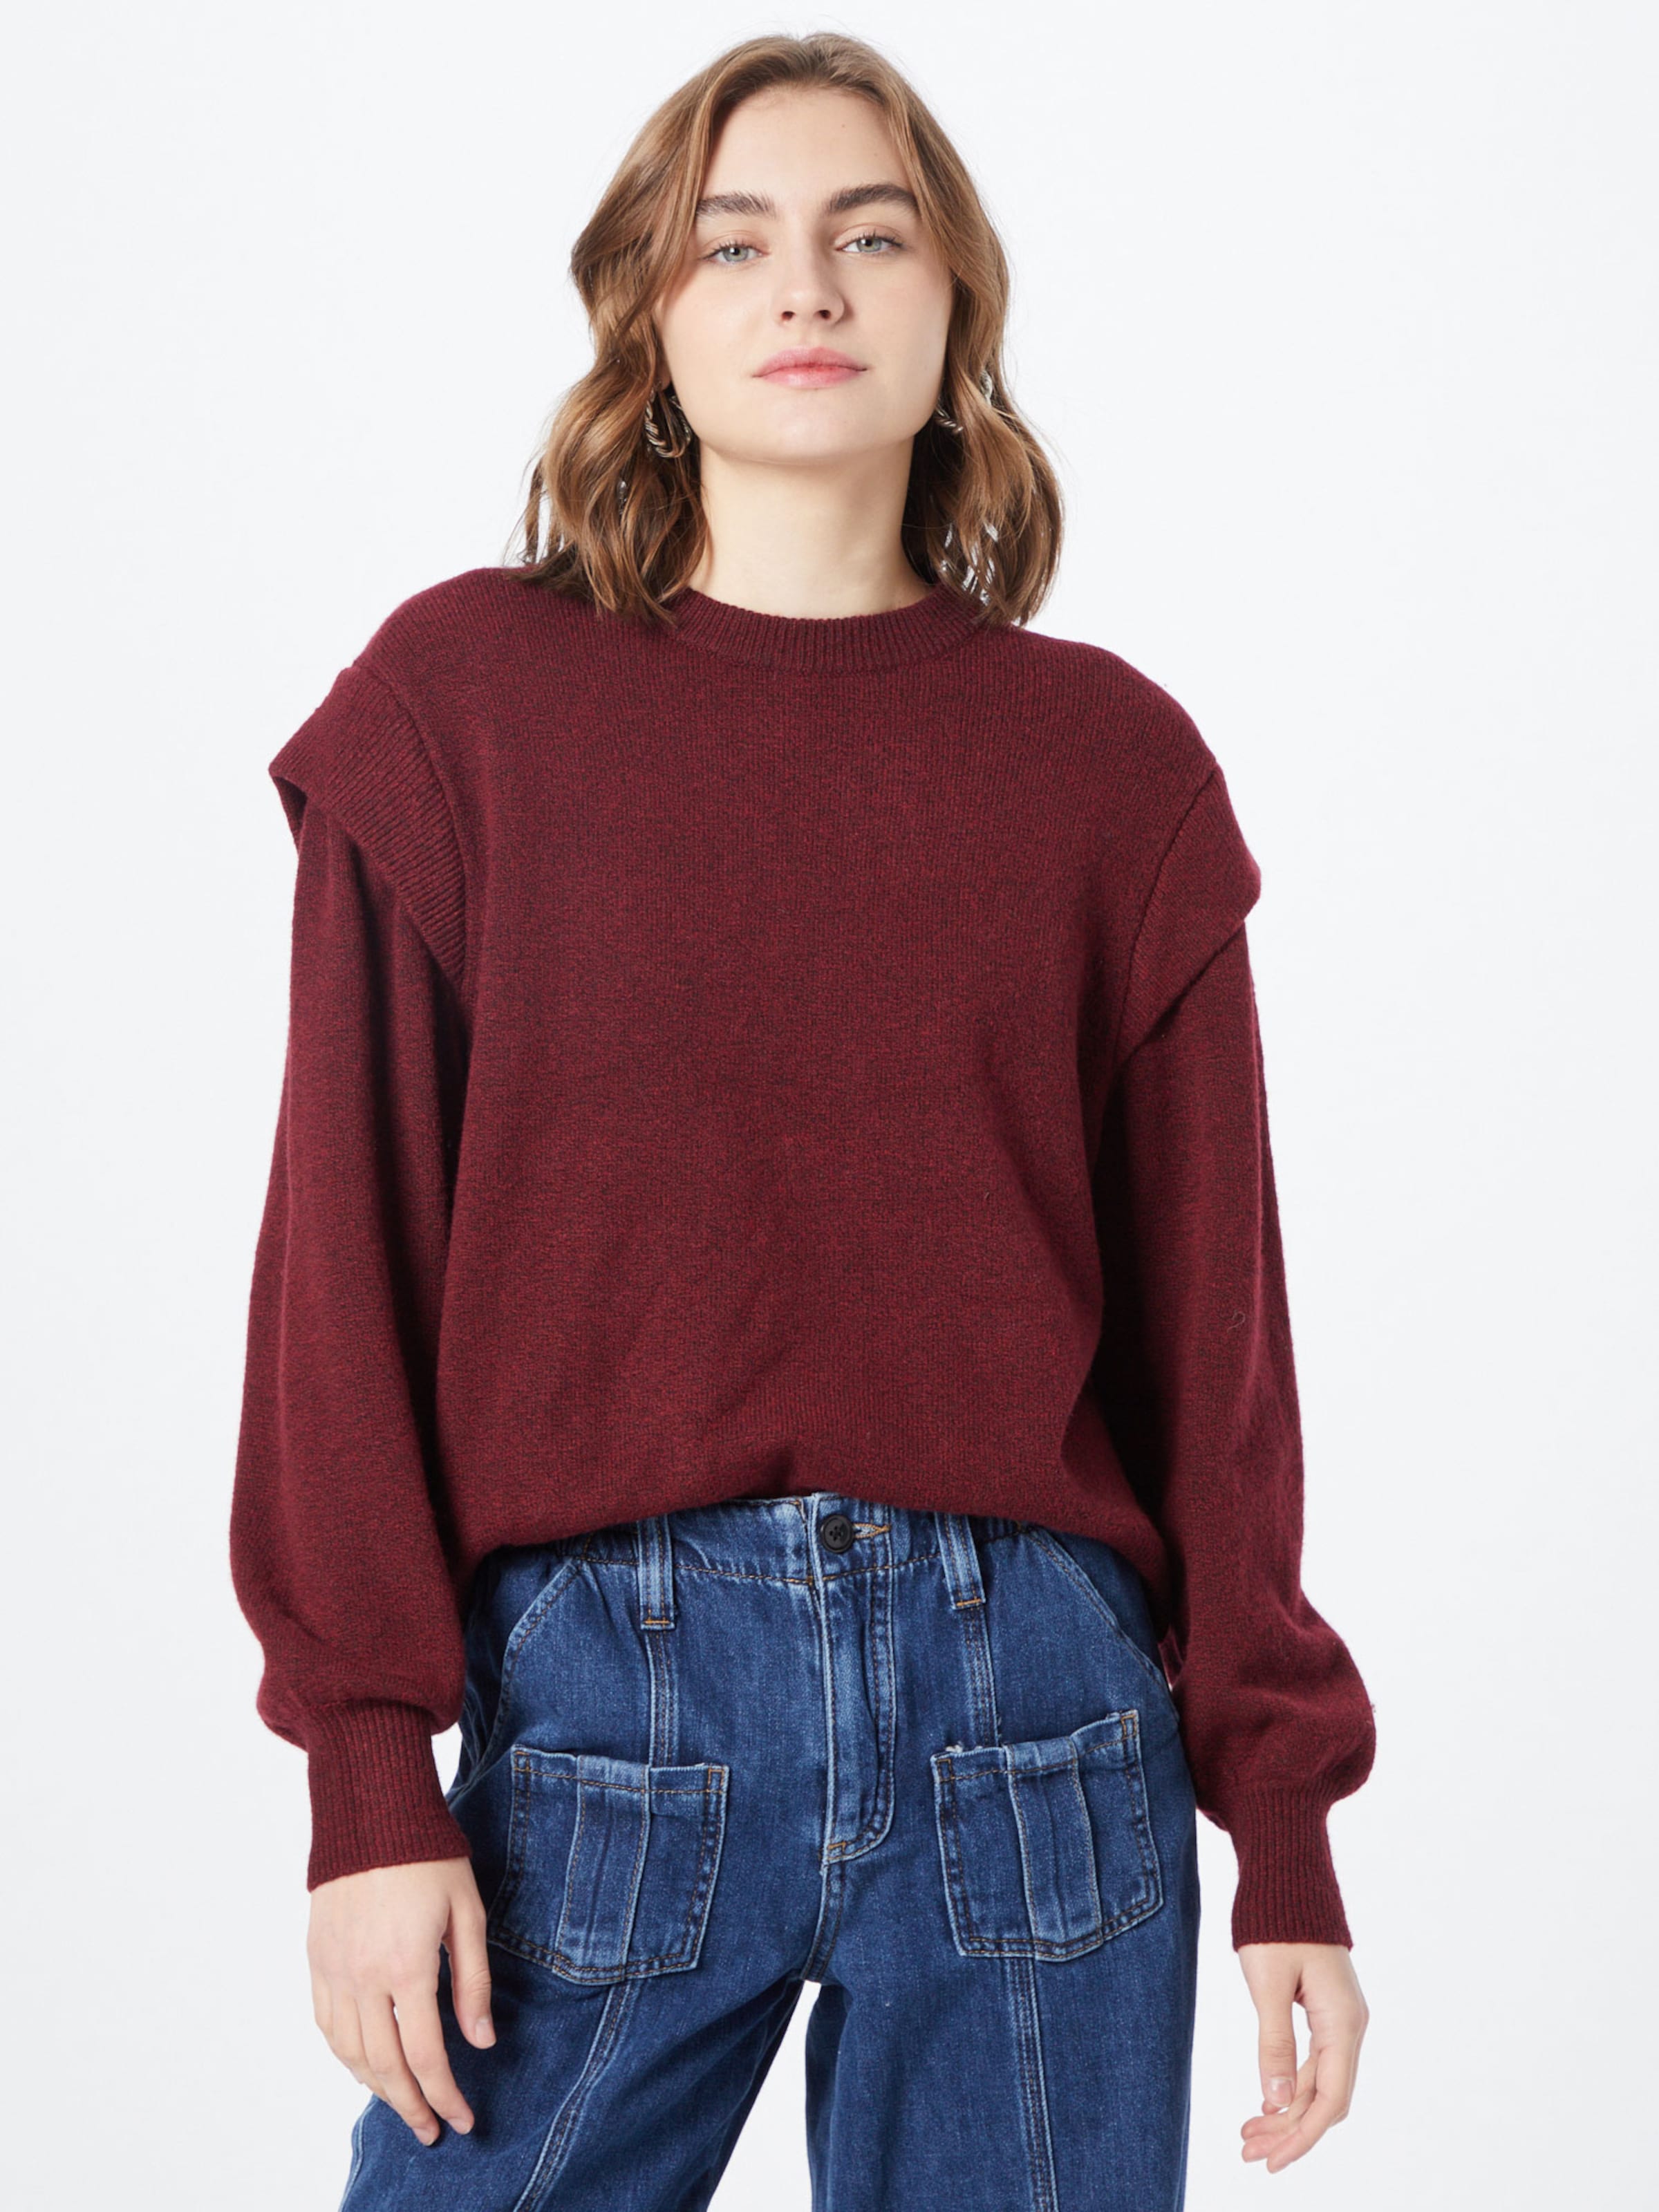 DAMEN Pullovers & Sweatshirts Basisch Grau M Rabatt 94 % Edc Pullover 